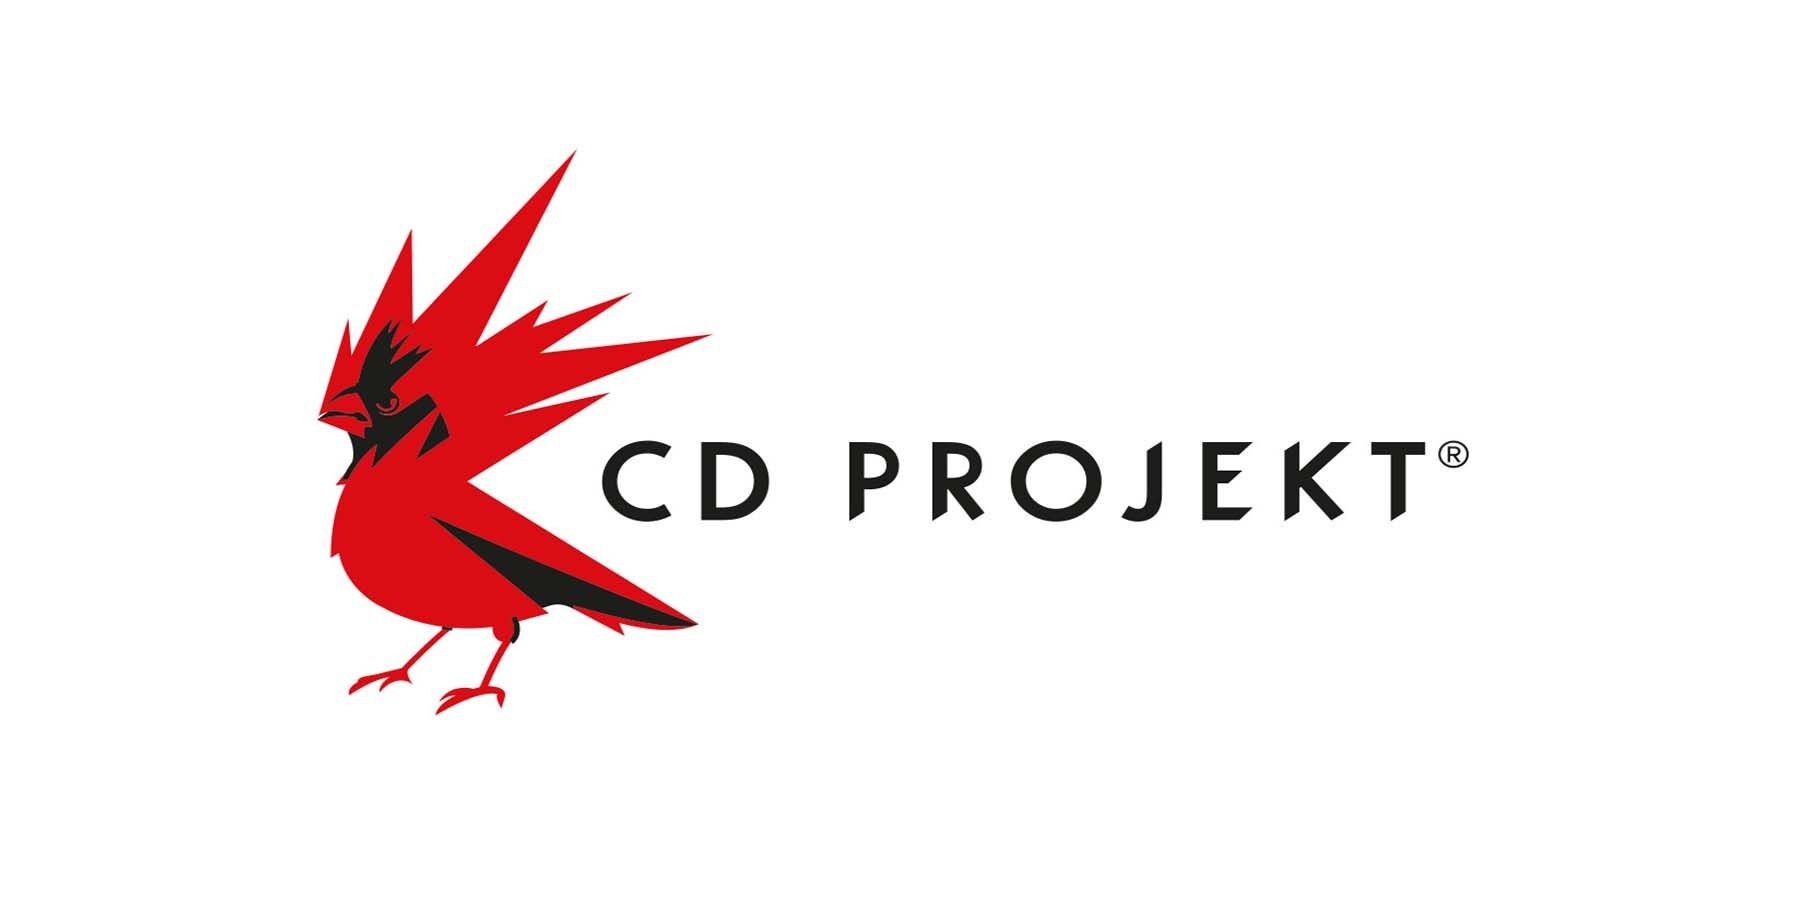 CD Projekt Red Announces New IP Project Hadar